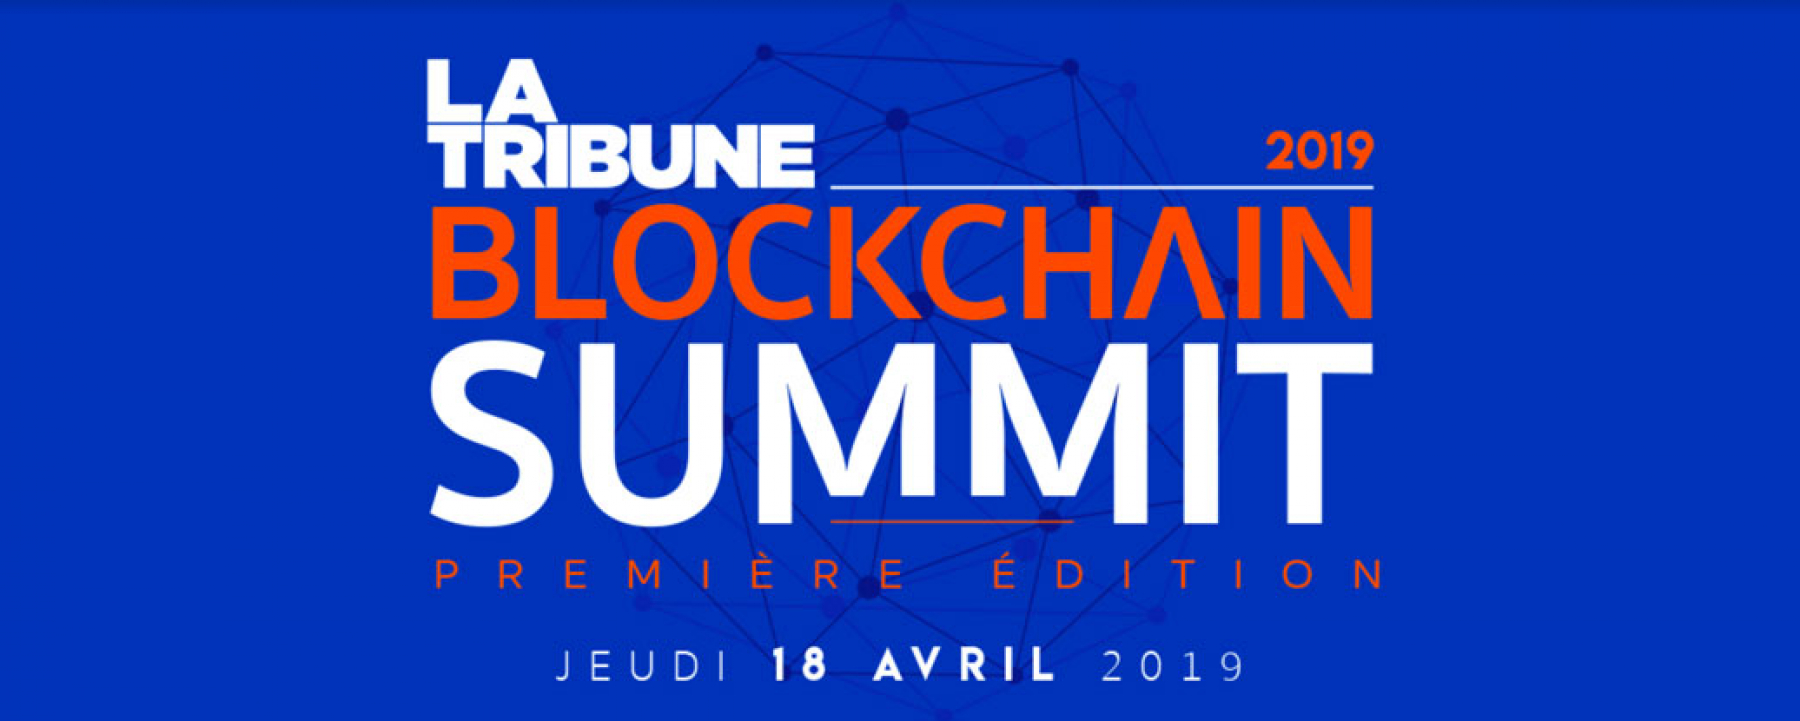 Tribune blockchain summit